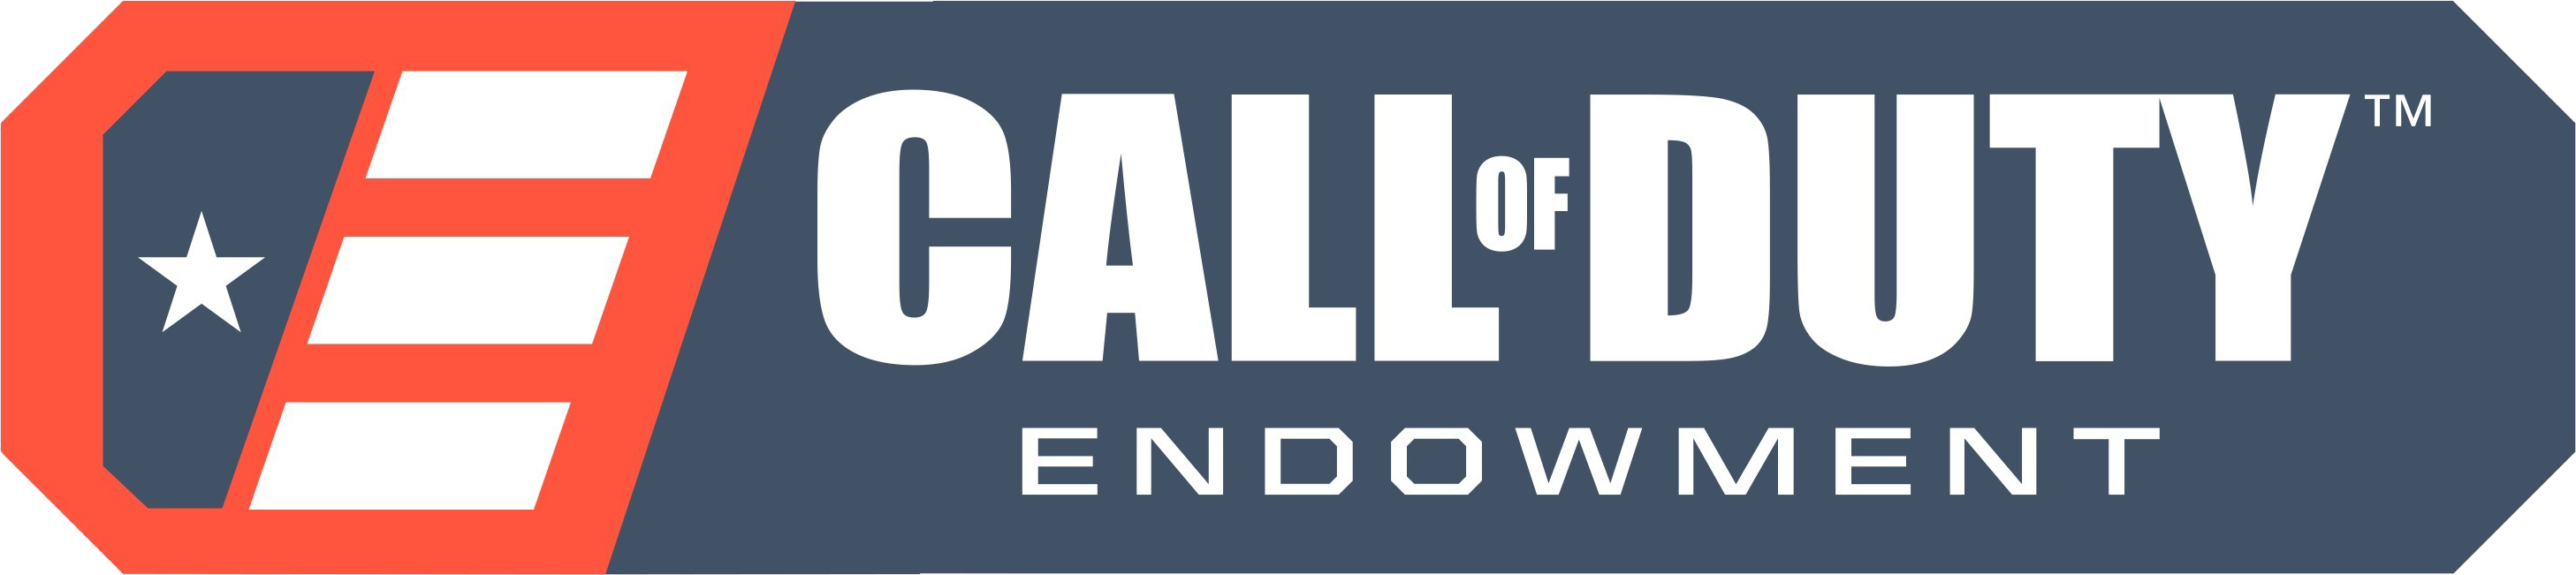 call of duty endowment banner